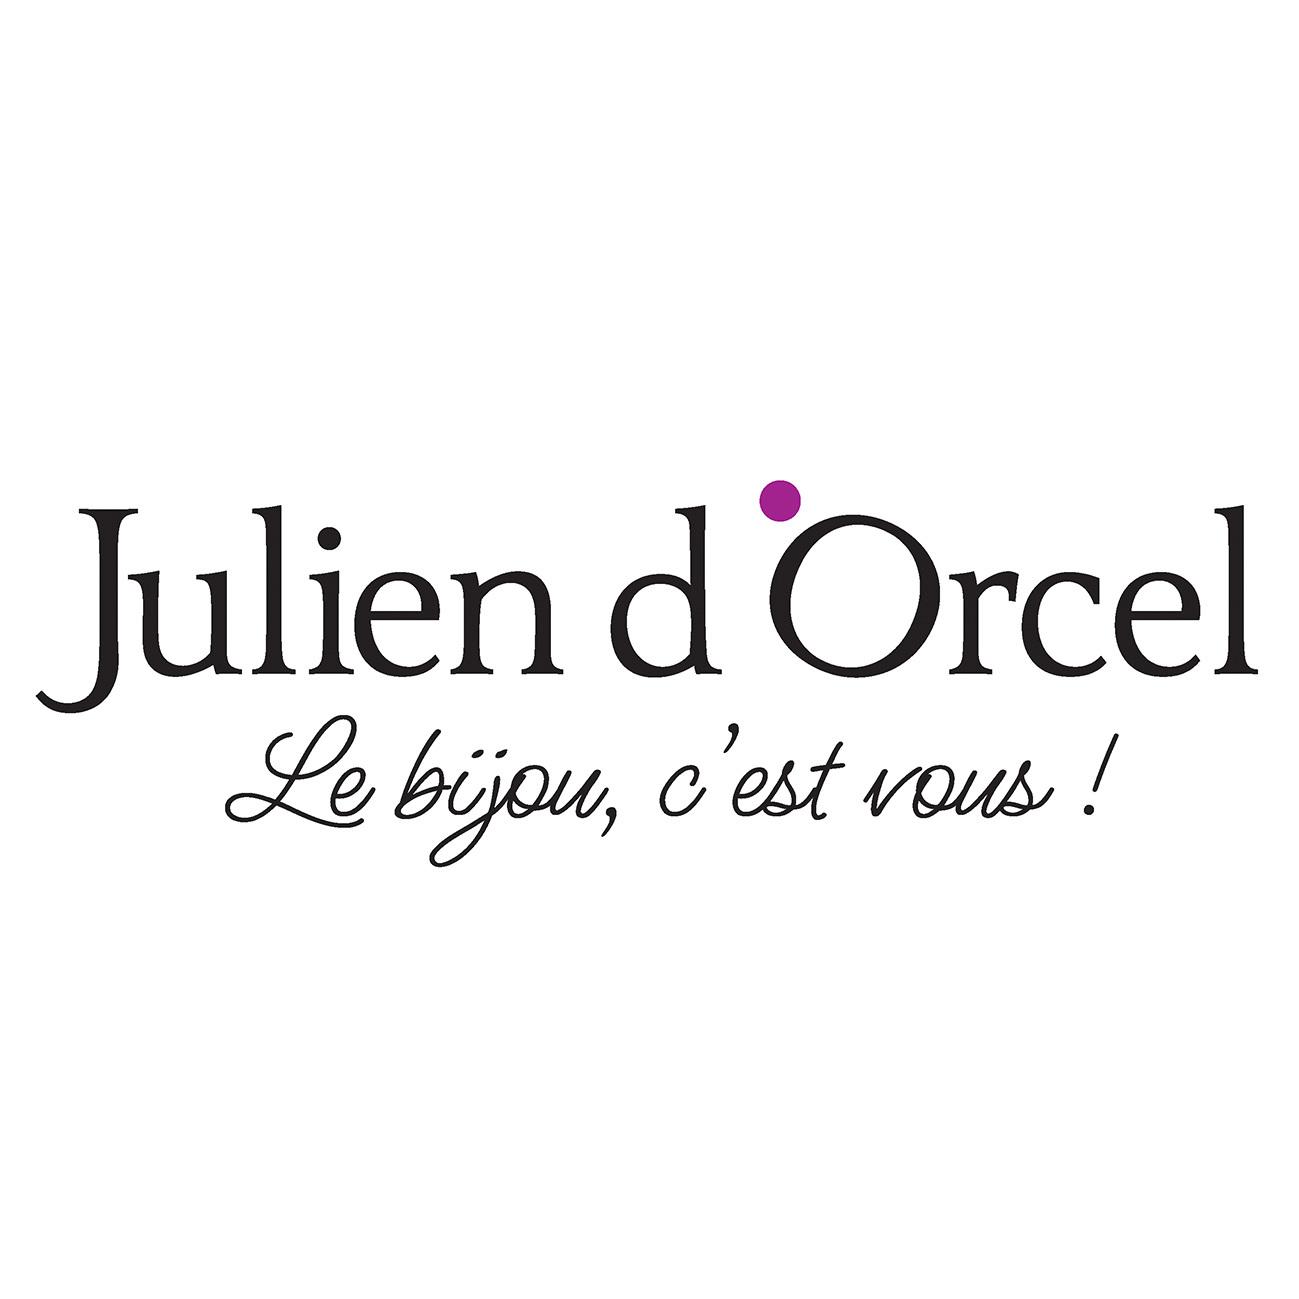 Julien D'orcel Saint Girons